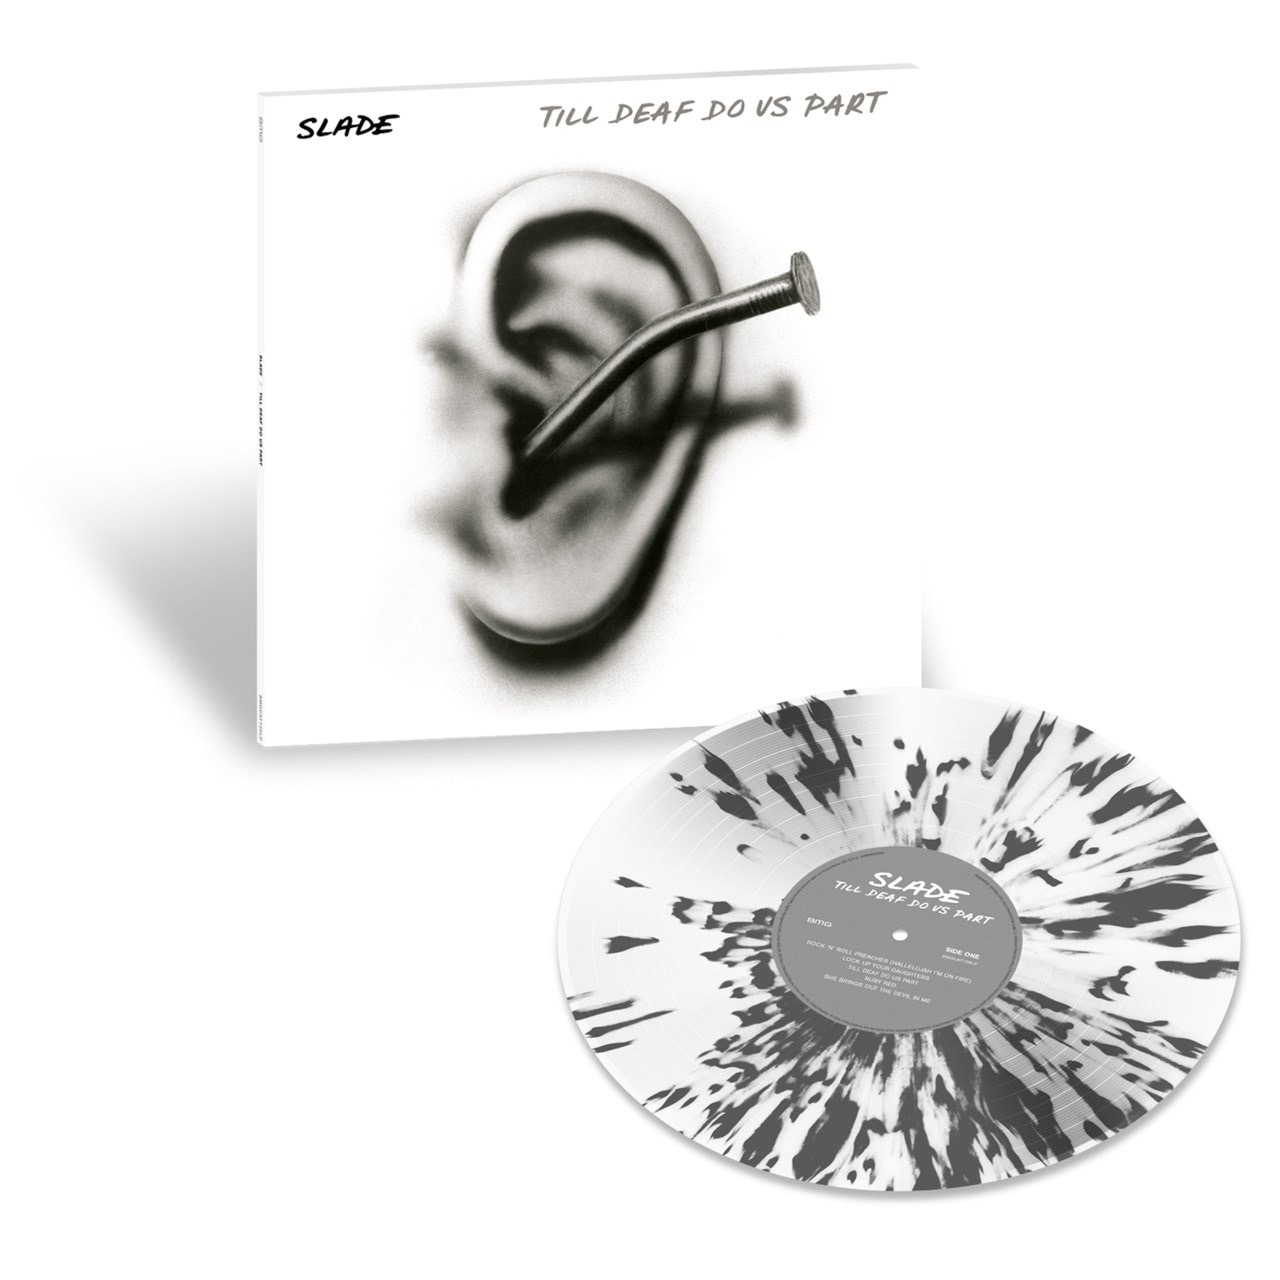 Slade – Till Deaf Do Us Part Vinyl Review